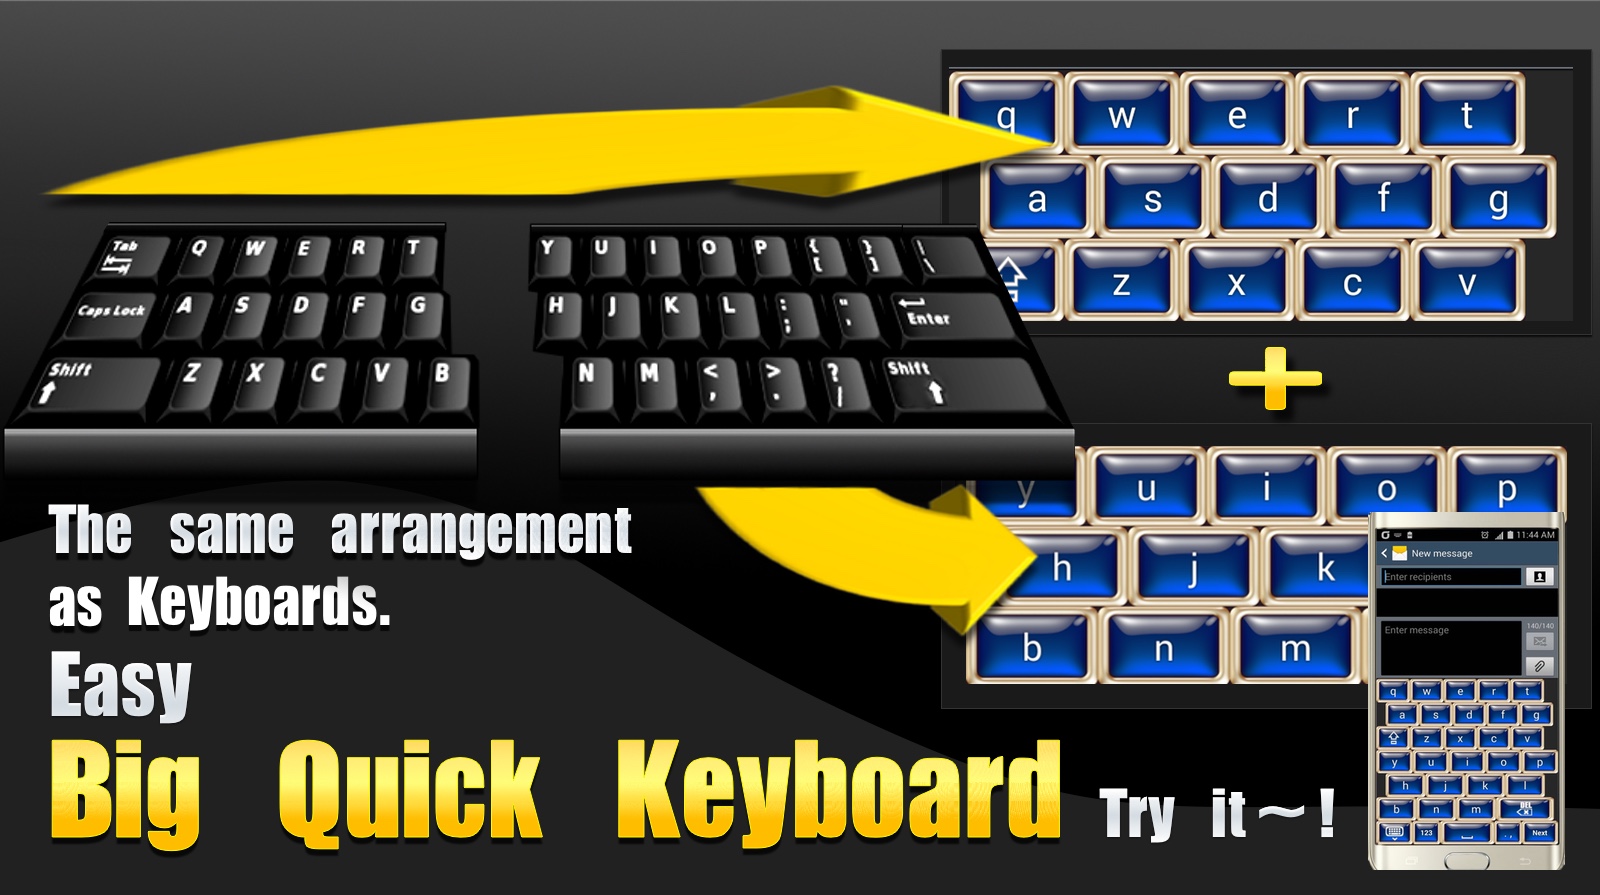 Big Quick Keyboard